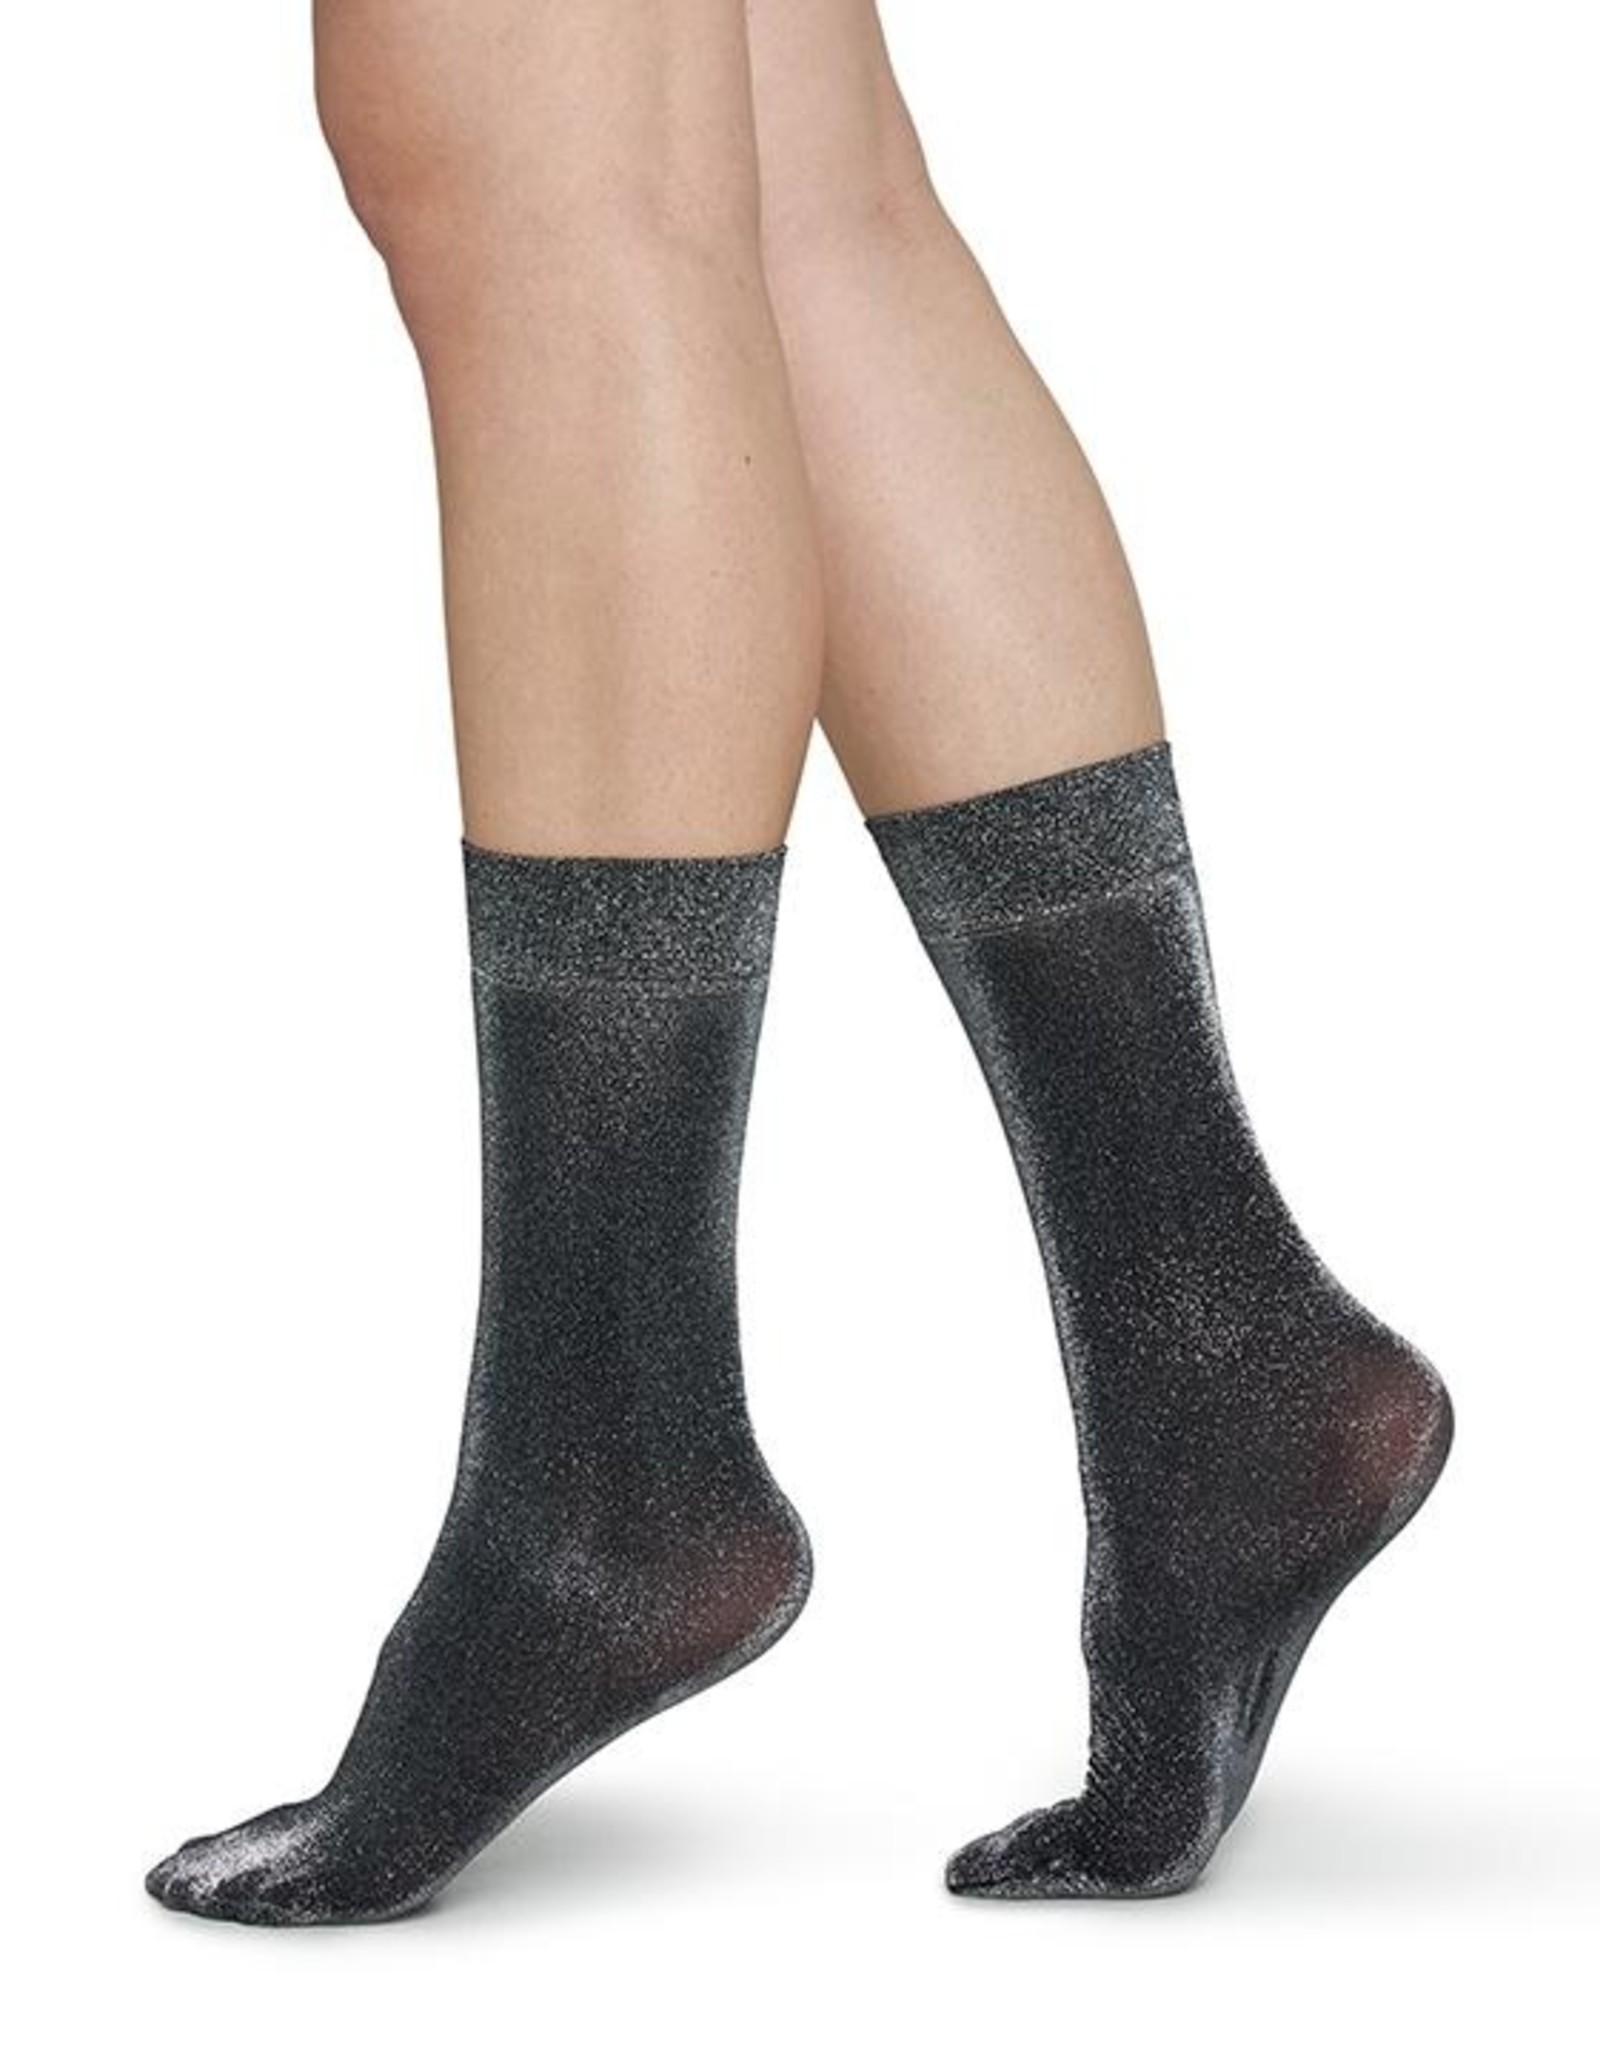 Swedish Stockings Ines Shimmery Socks